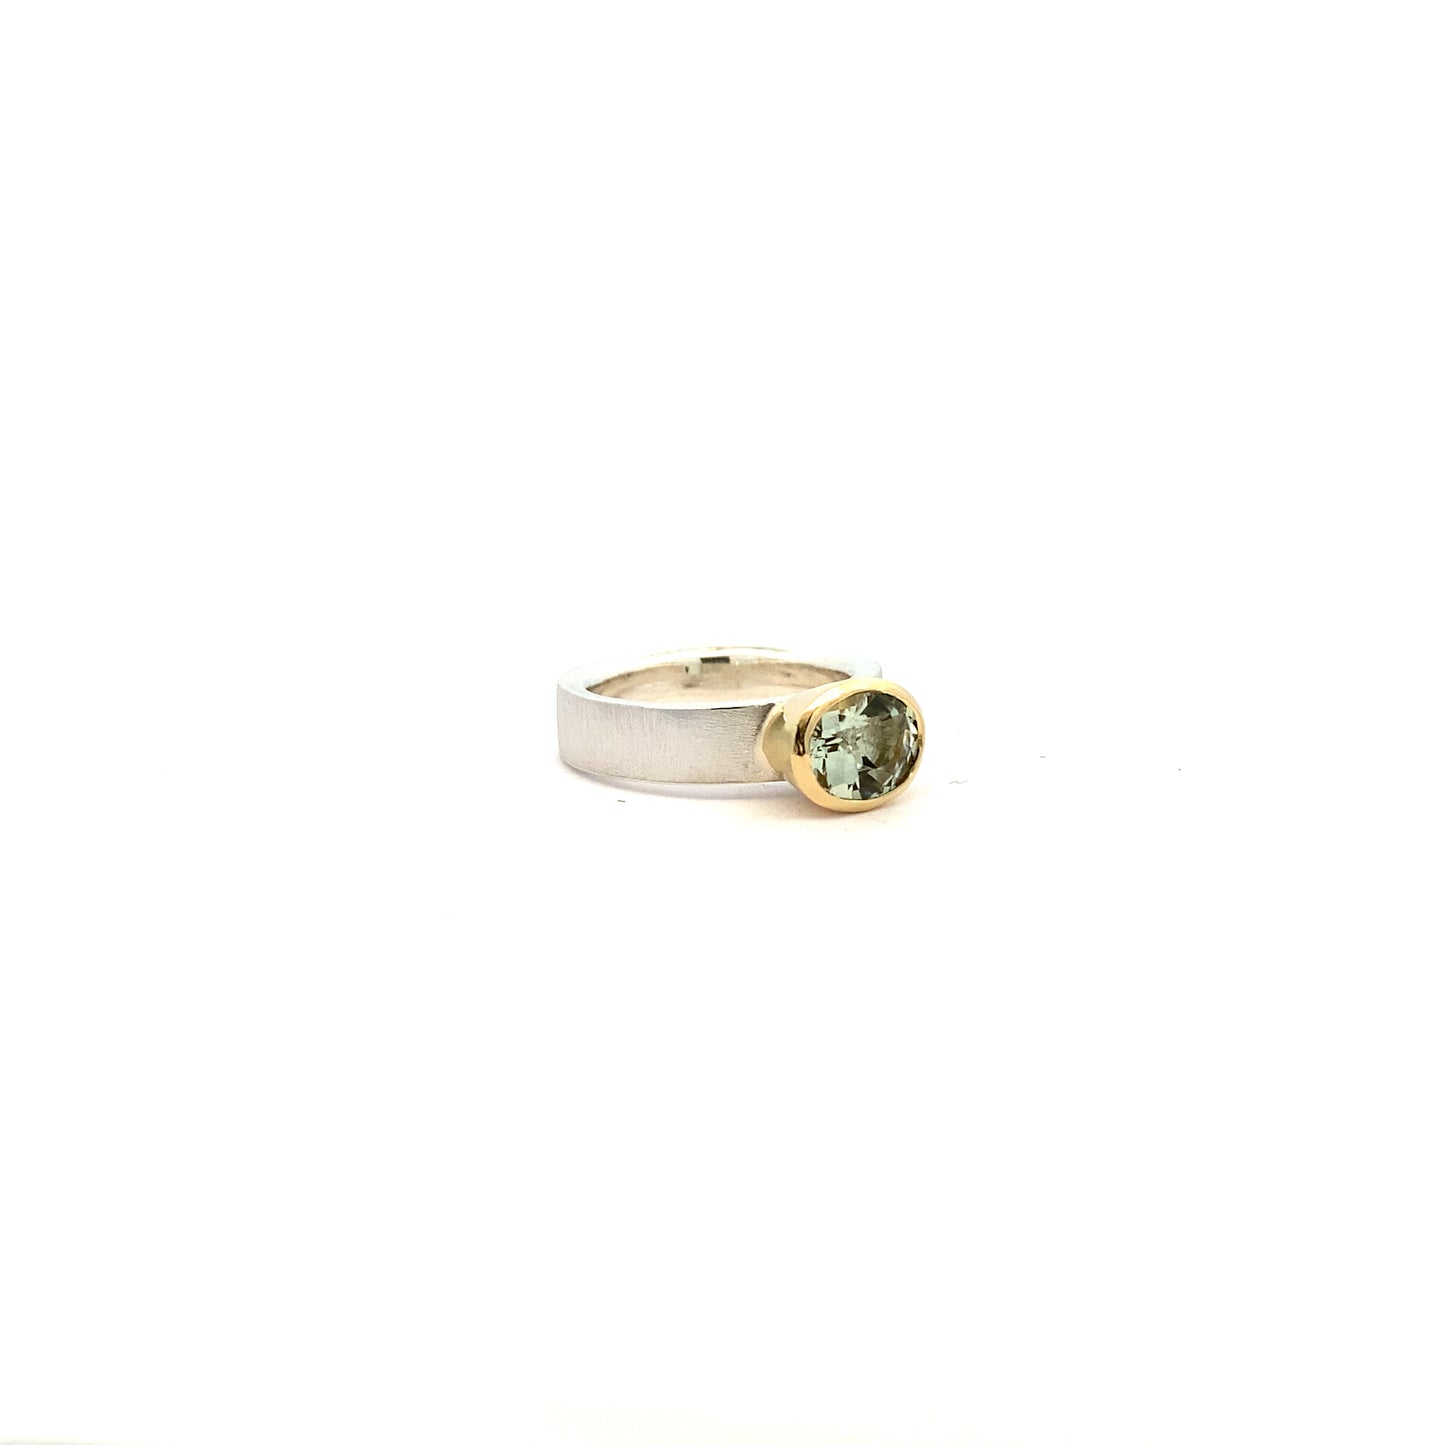 Oval Cut Pale Green Beryl Ring